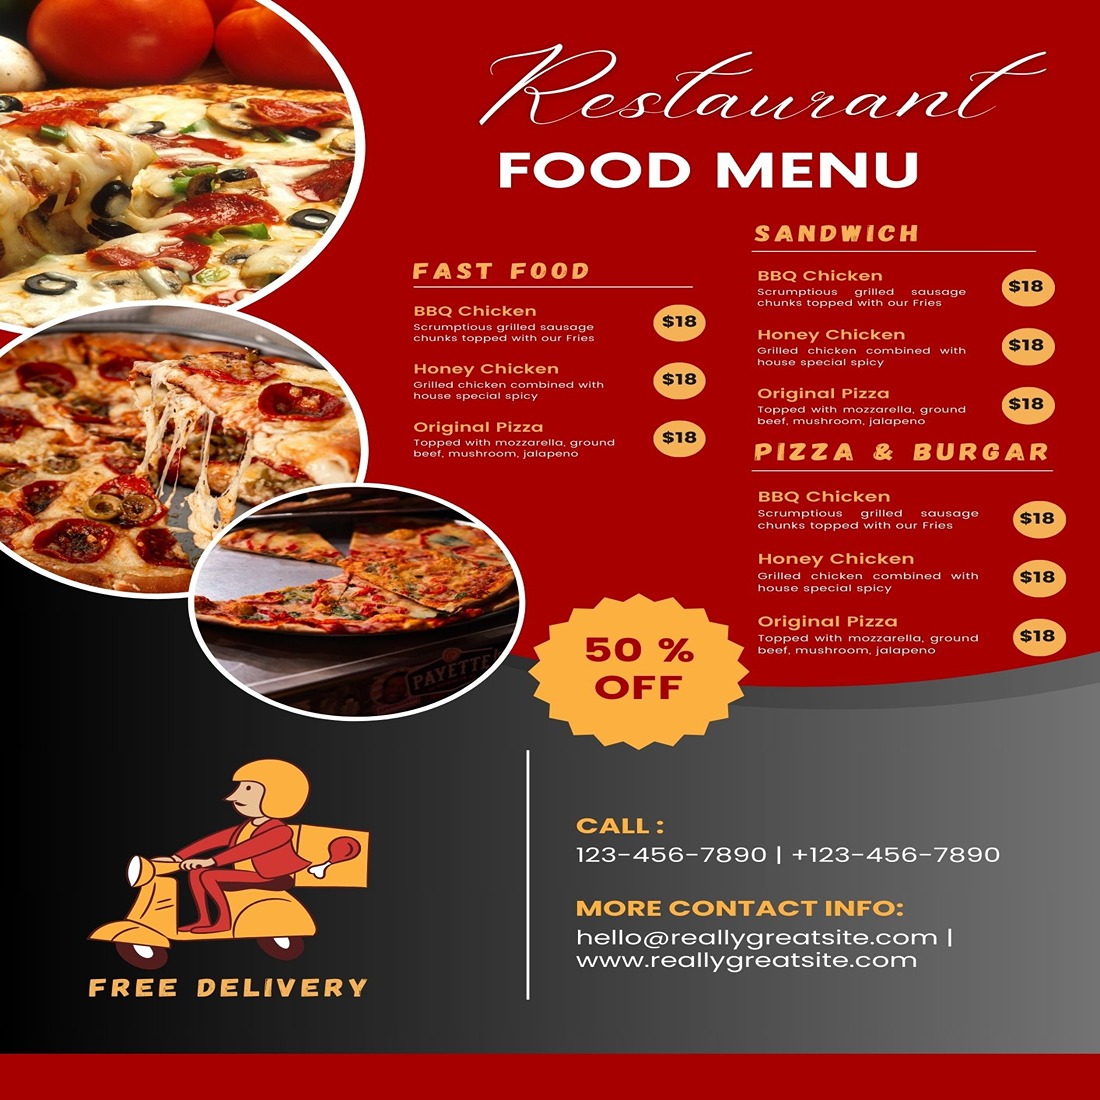 Restaurant - Fast Food Menu Card Design Template preview image.